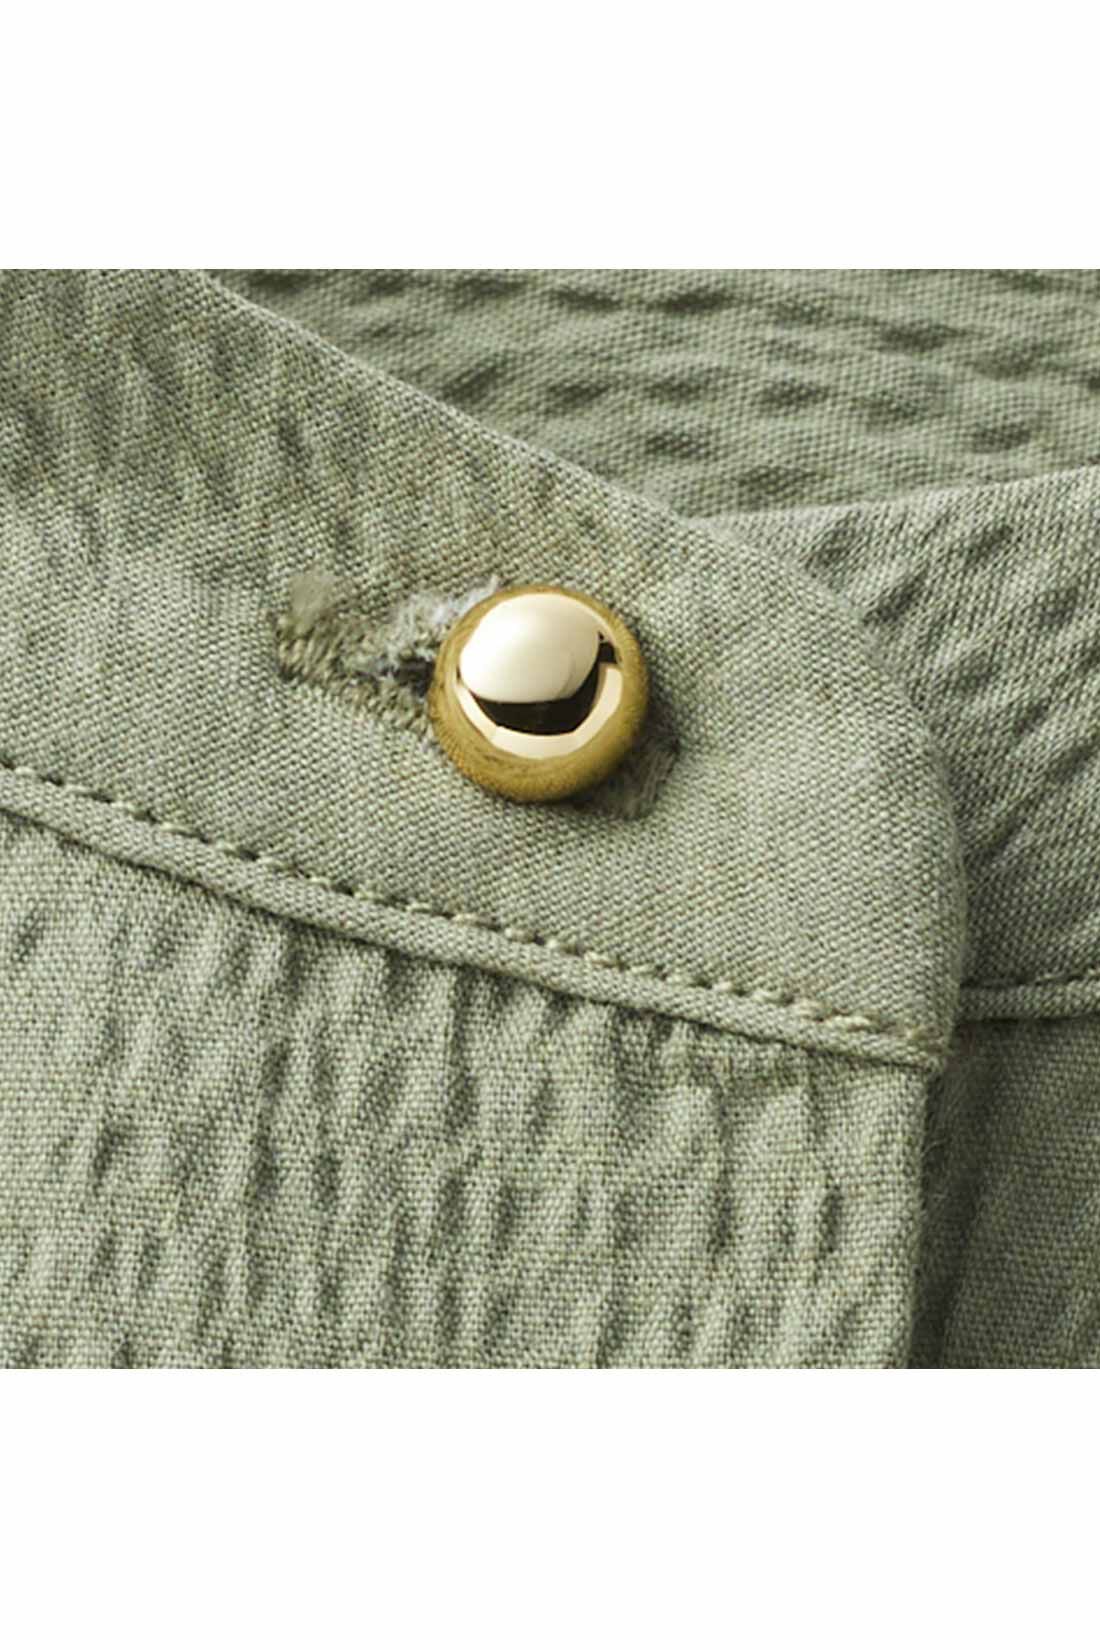 IEDIT|IEDIT[イディット]　バンドカラーとゴールドボタンで着映えする サッカー素材のシャツワンピース|上品な比翼ボタン仕立て。一番上のゴールドボタンでほんのり華やぎをプラス。